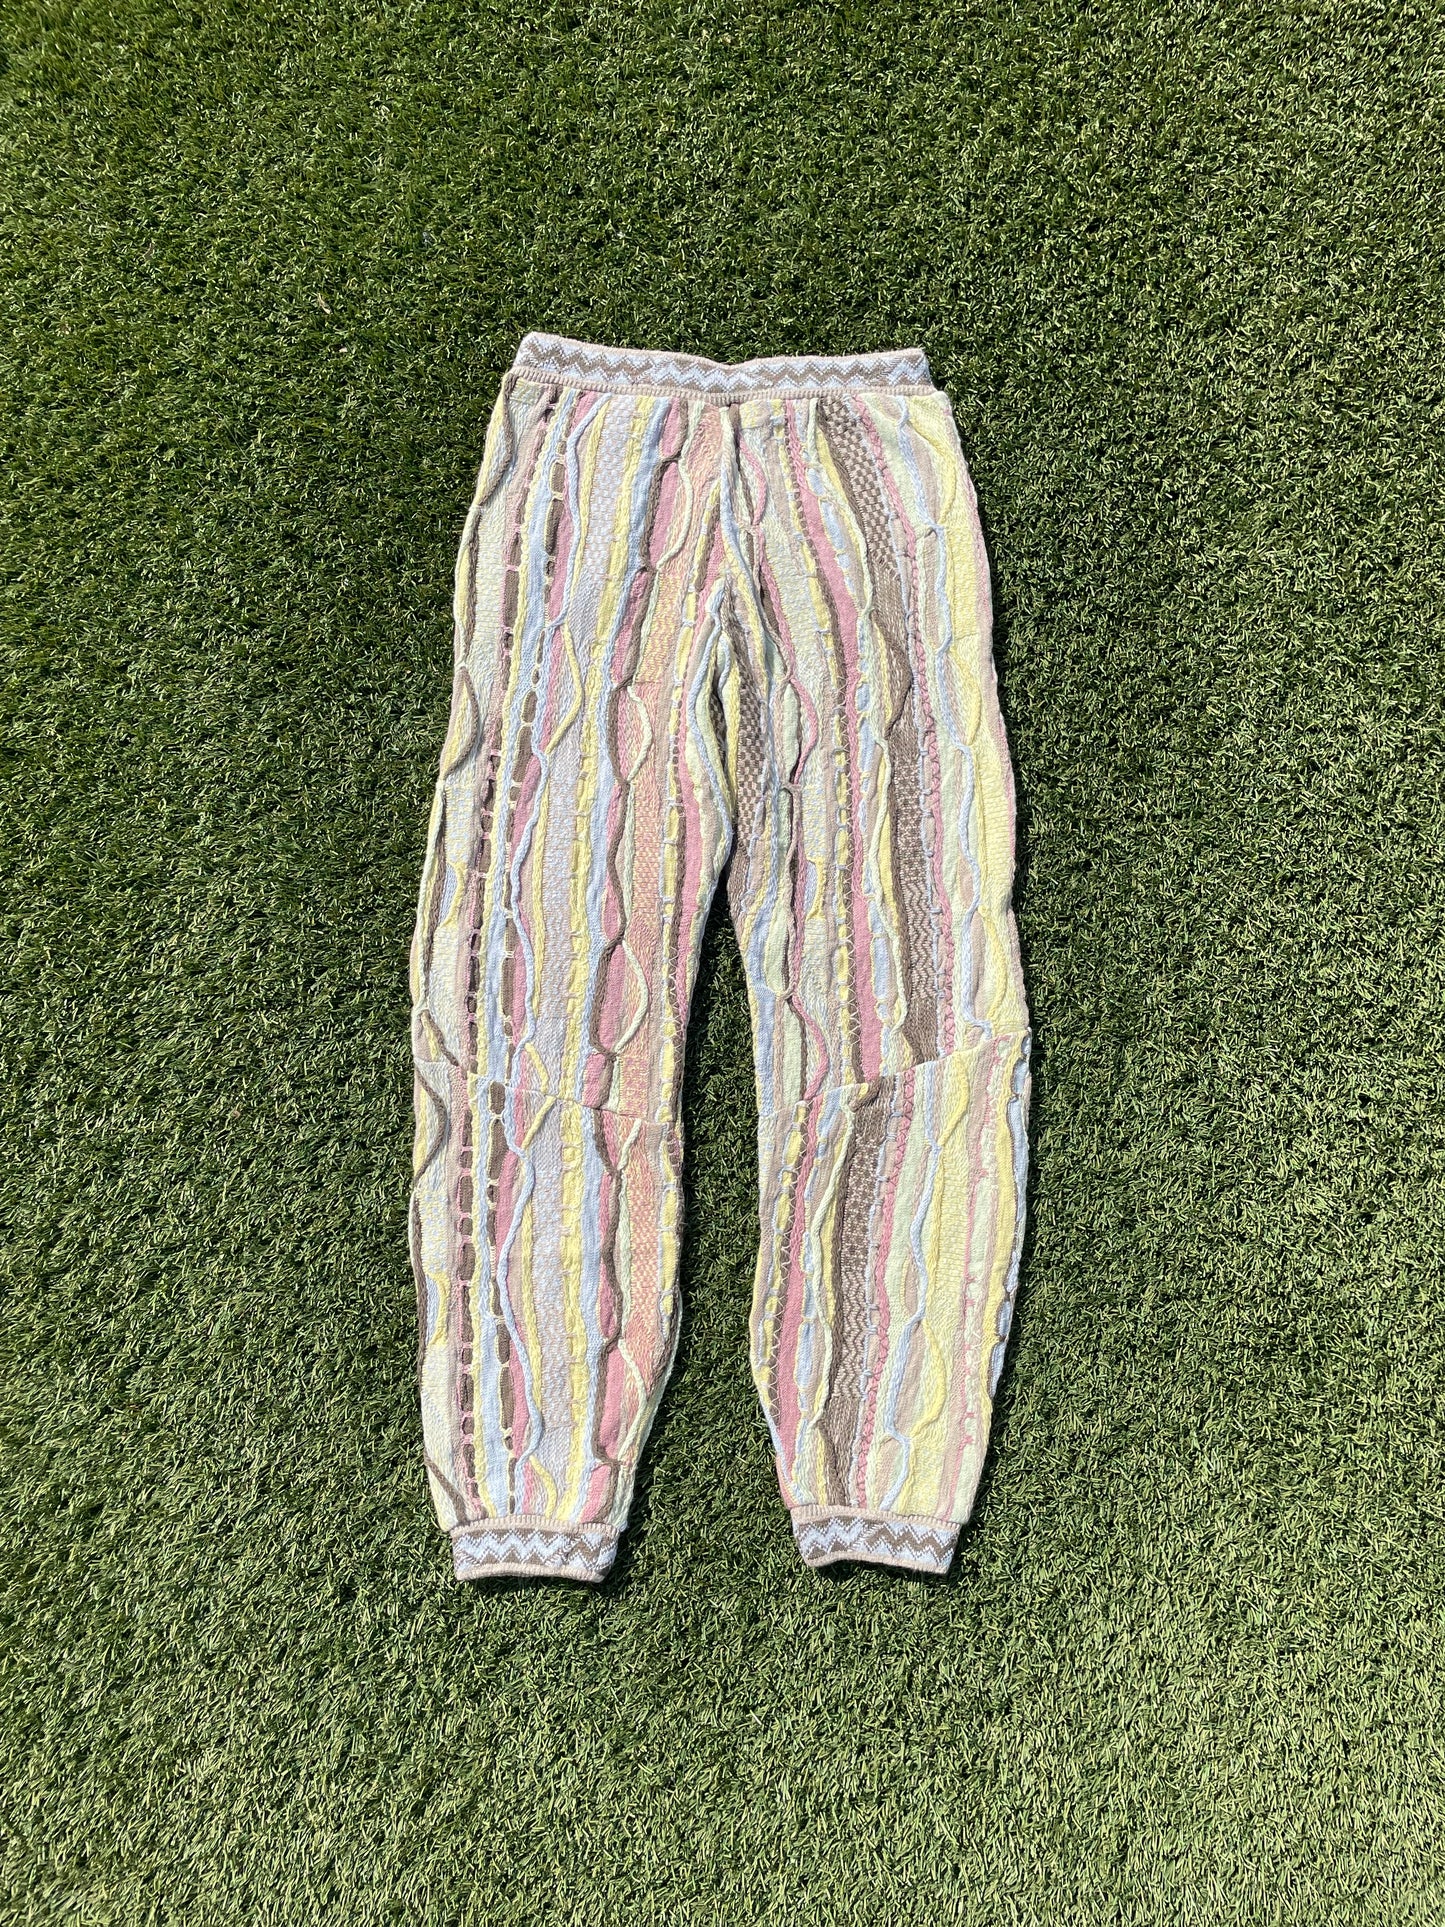 Kapital 7G Gaudy Knit Sweatpants